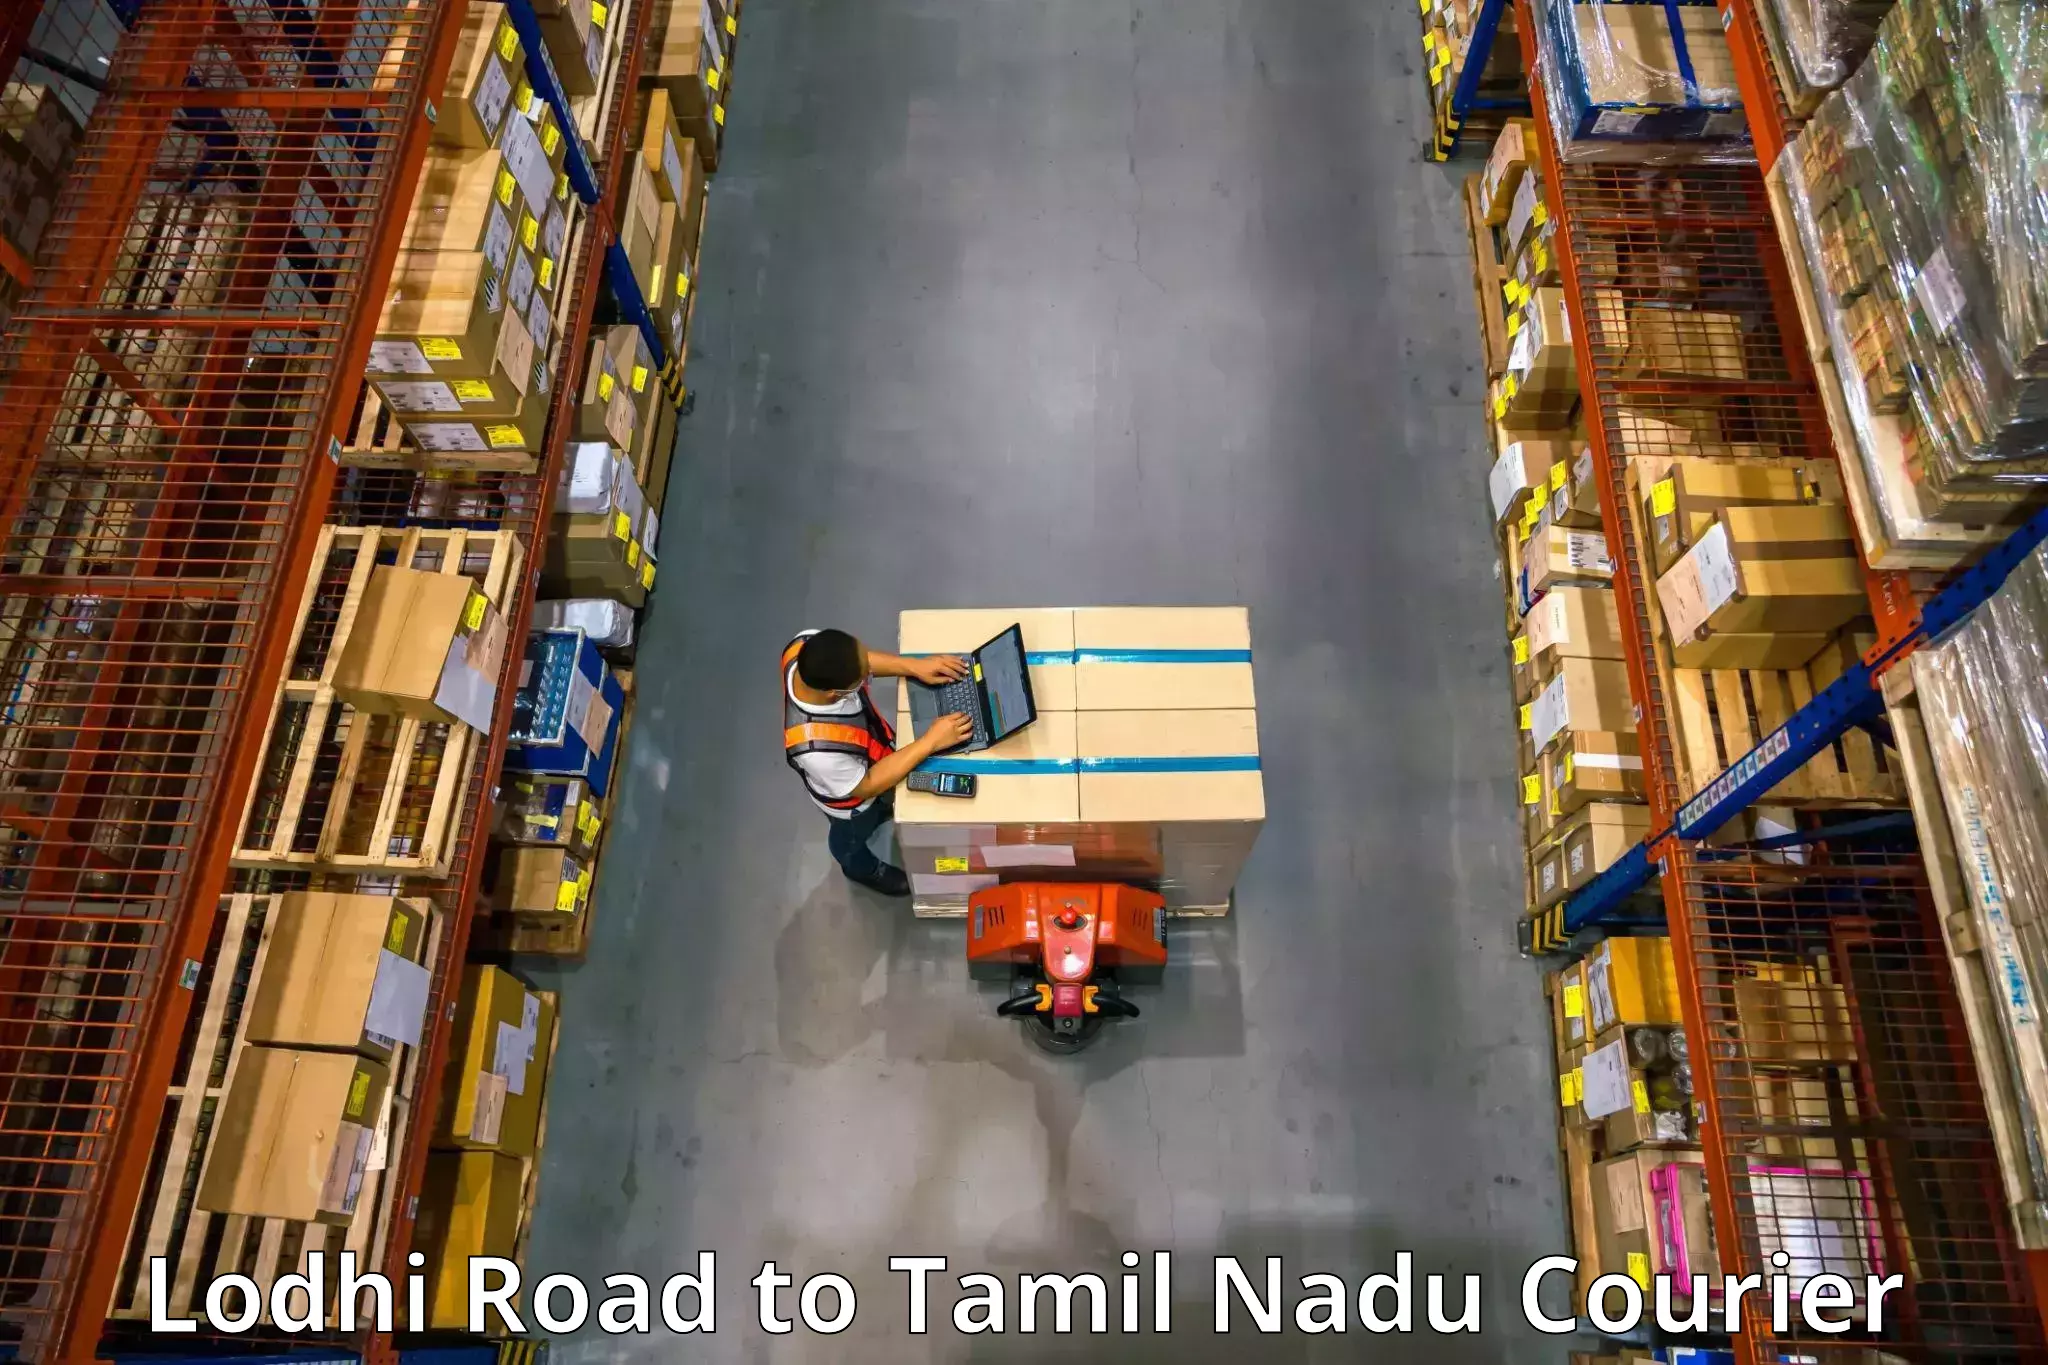 Professional moving company Lodhi Road to Tiruvallur